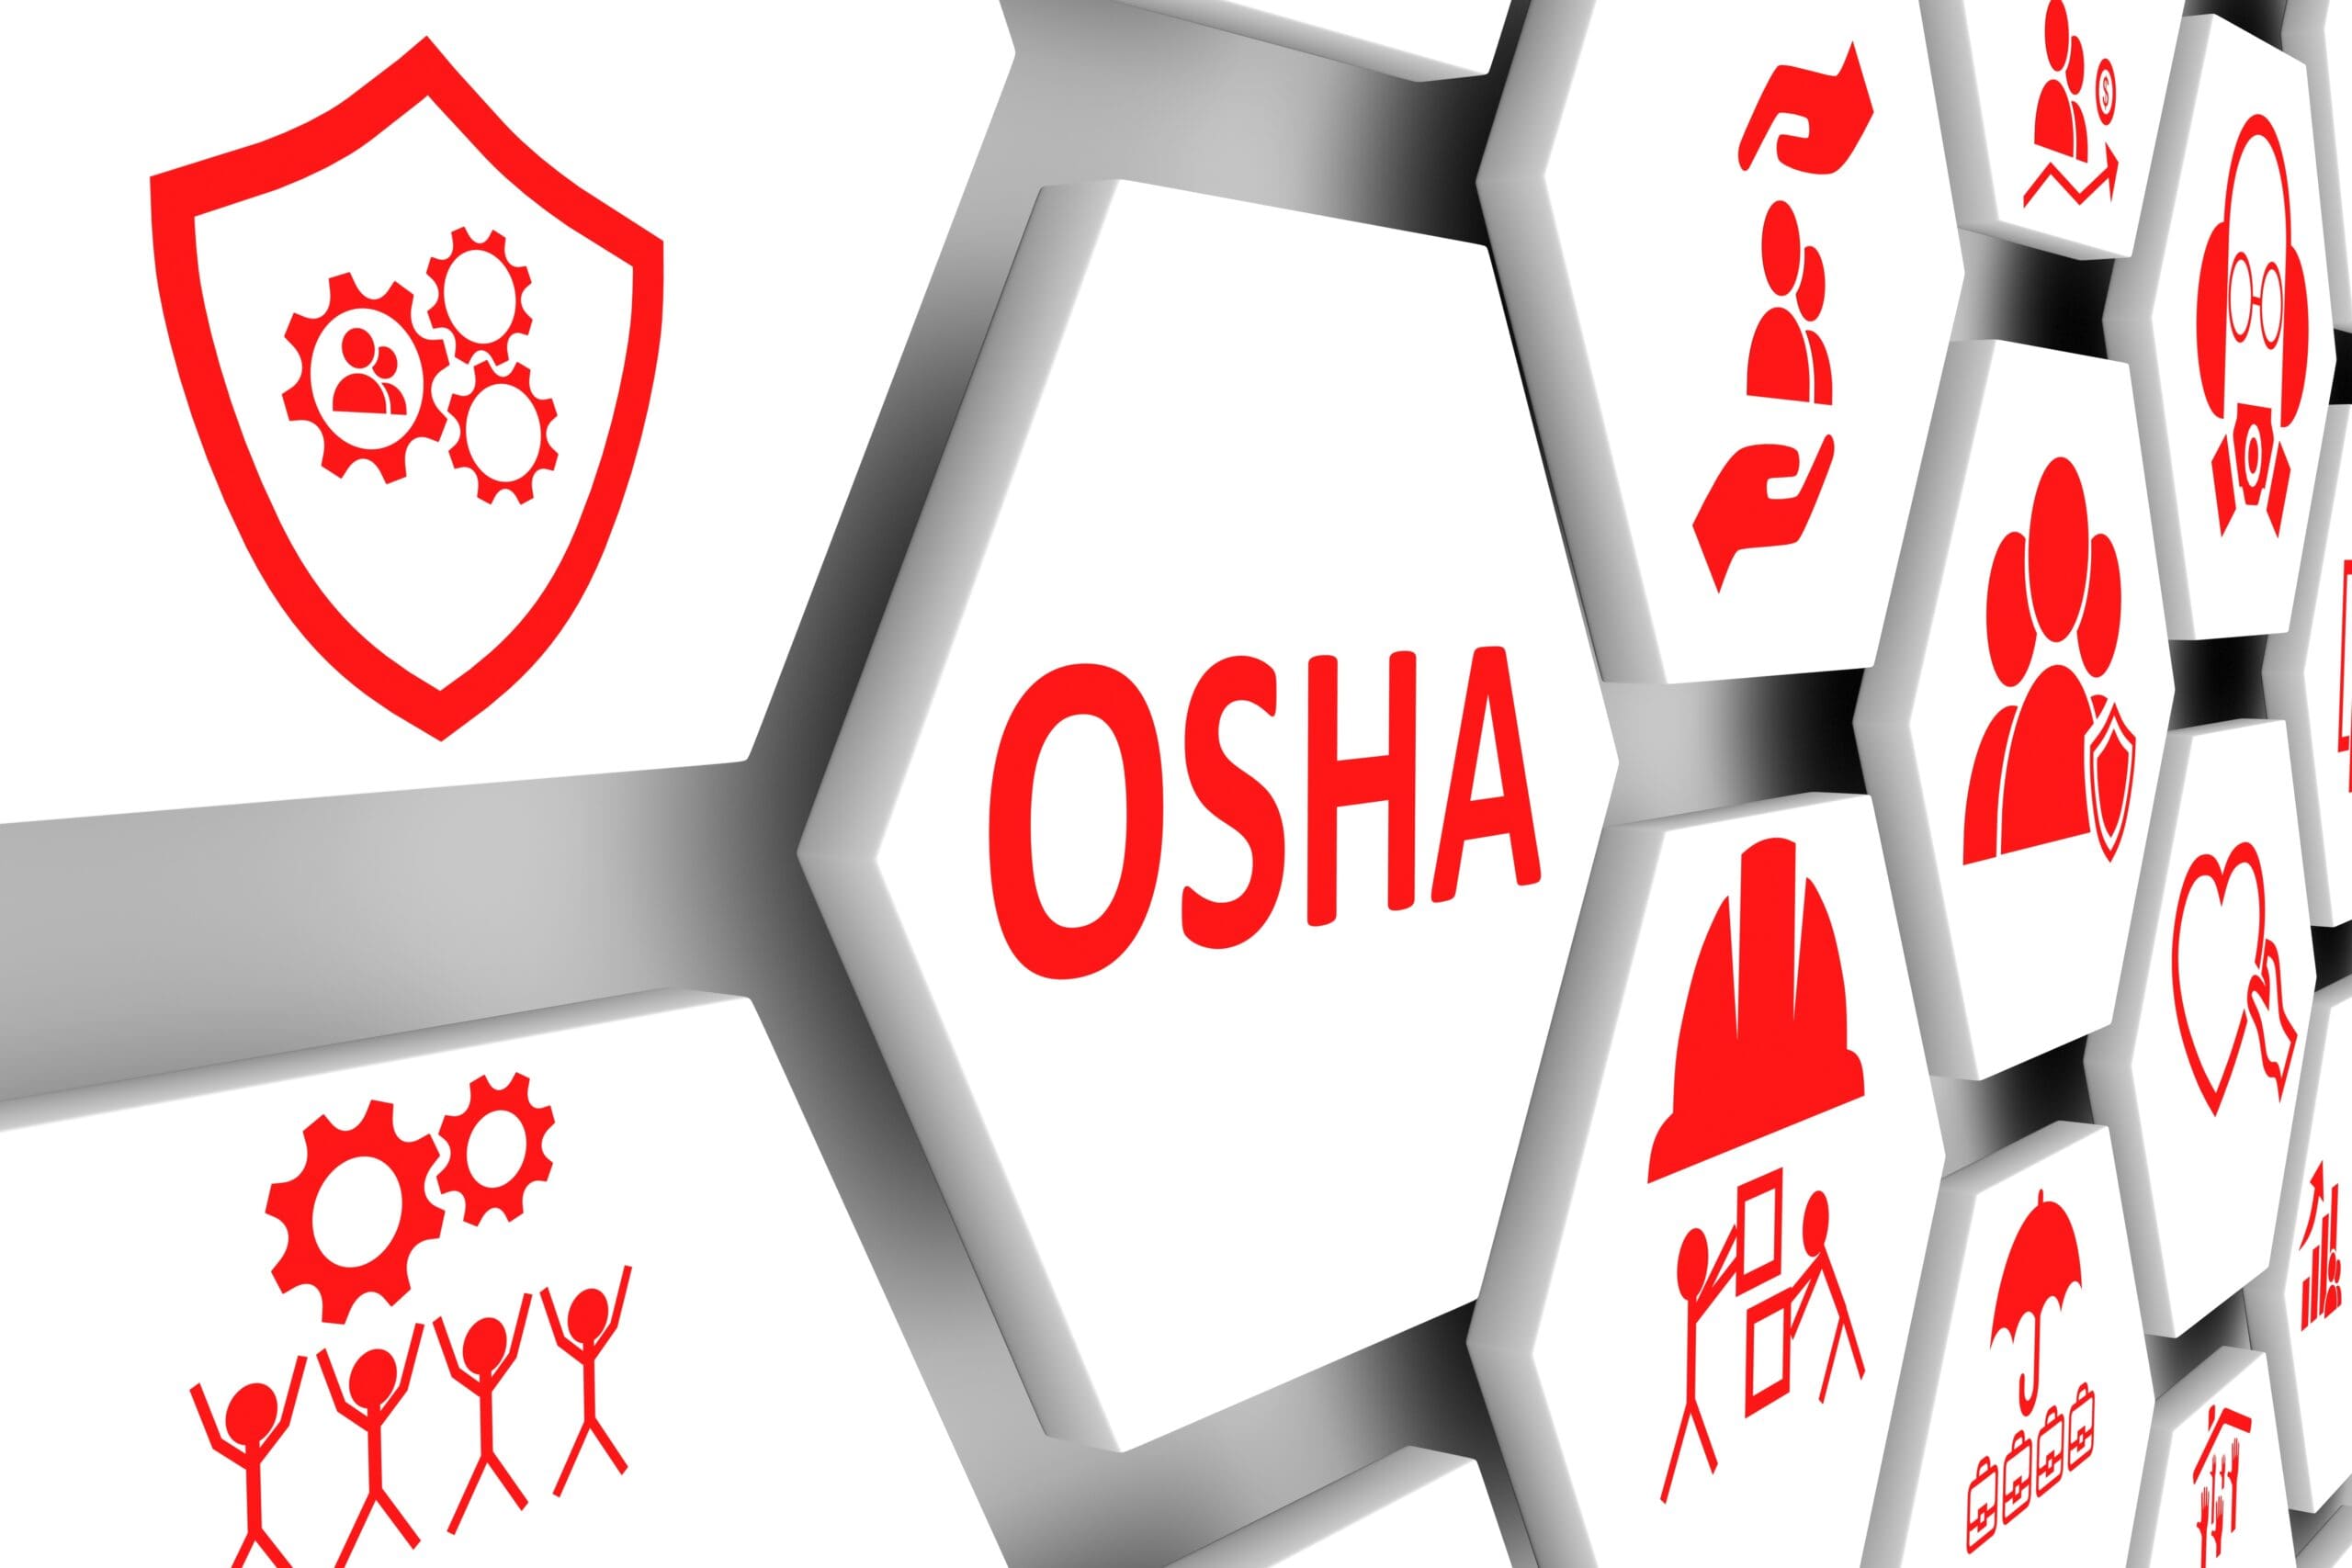 OSHA symbols